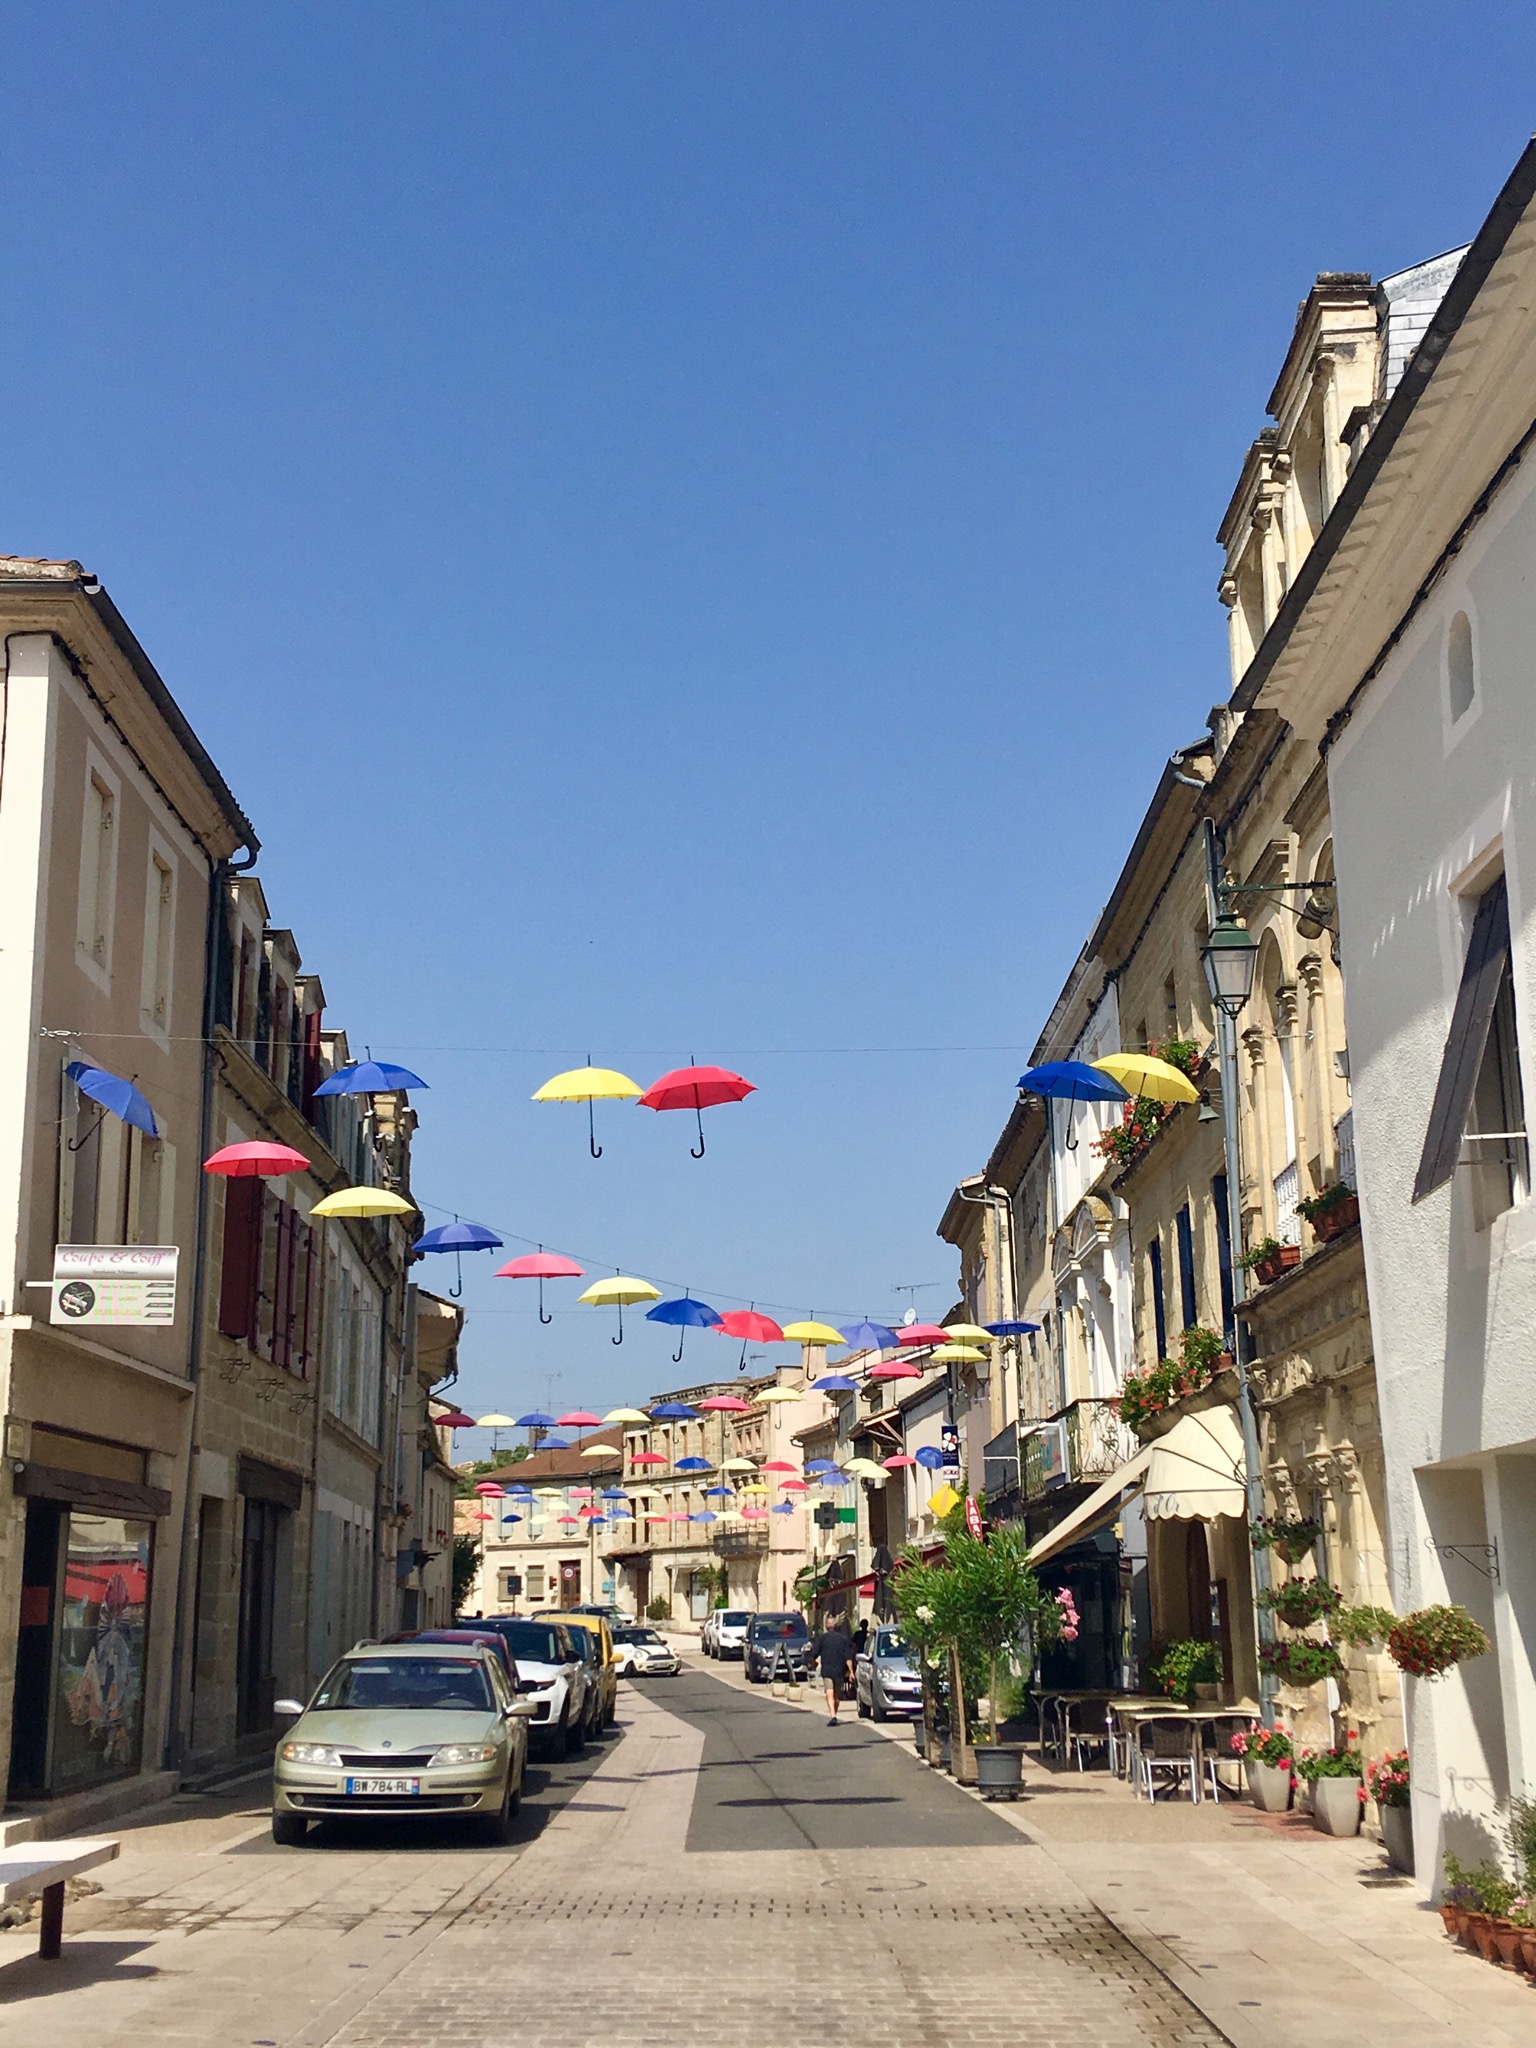 Lauzen street with umbrellas hanging